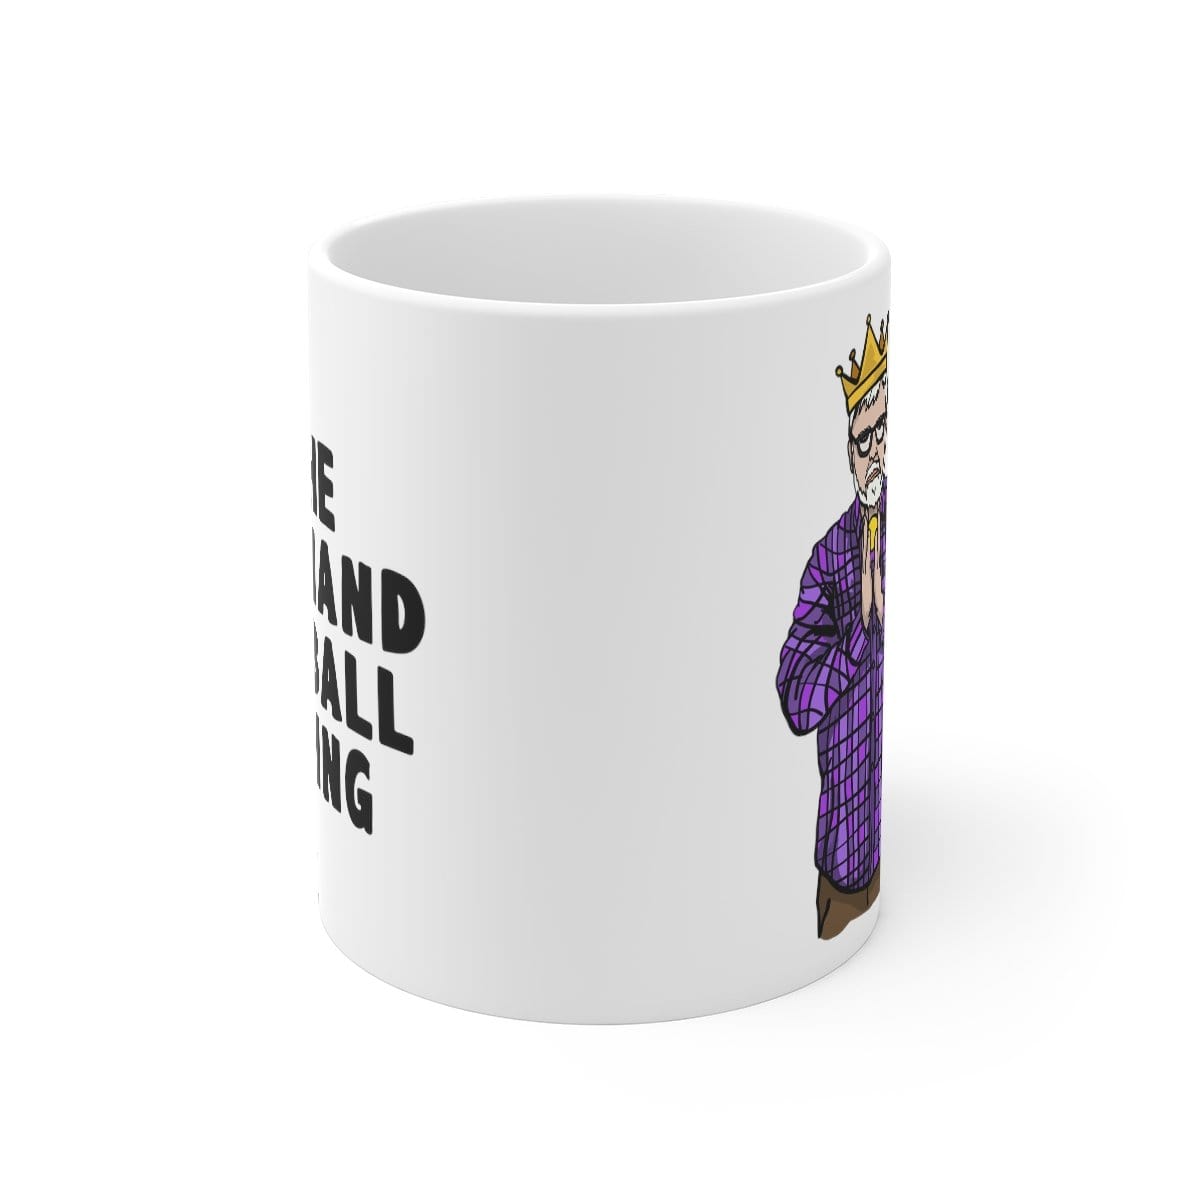 K Rudd Handball King 👑 - Coffee Mug